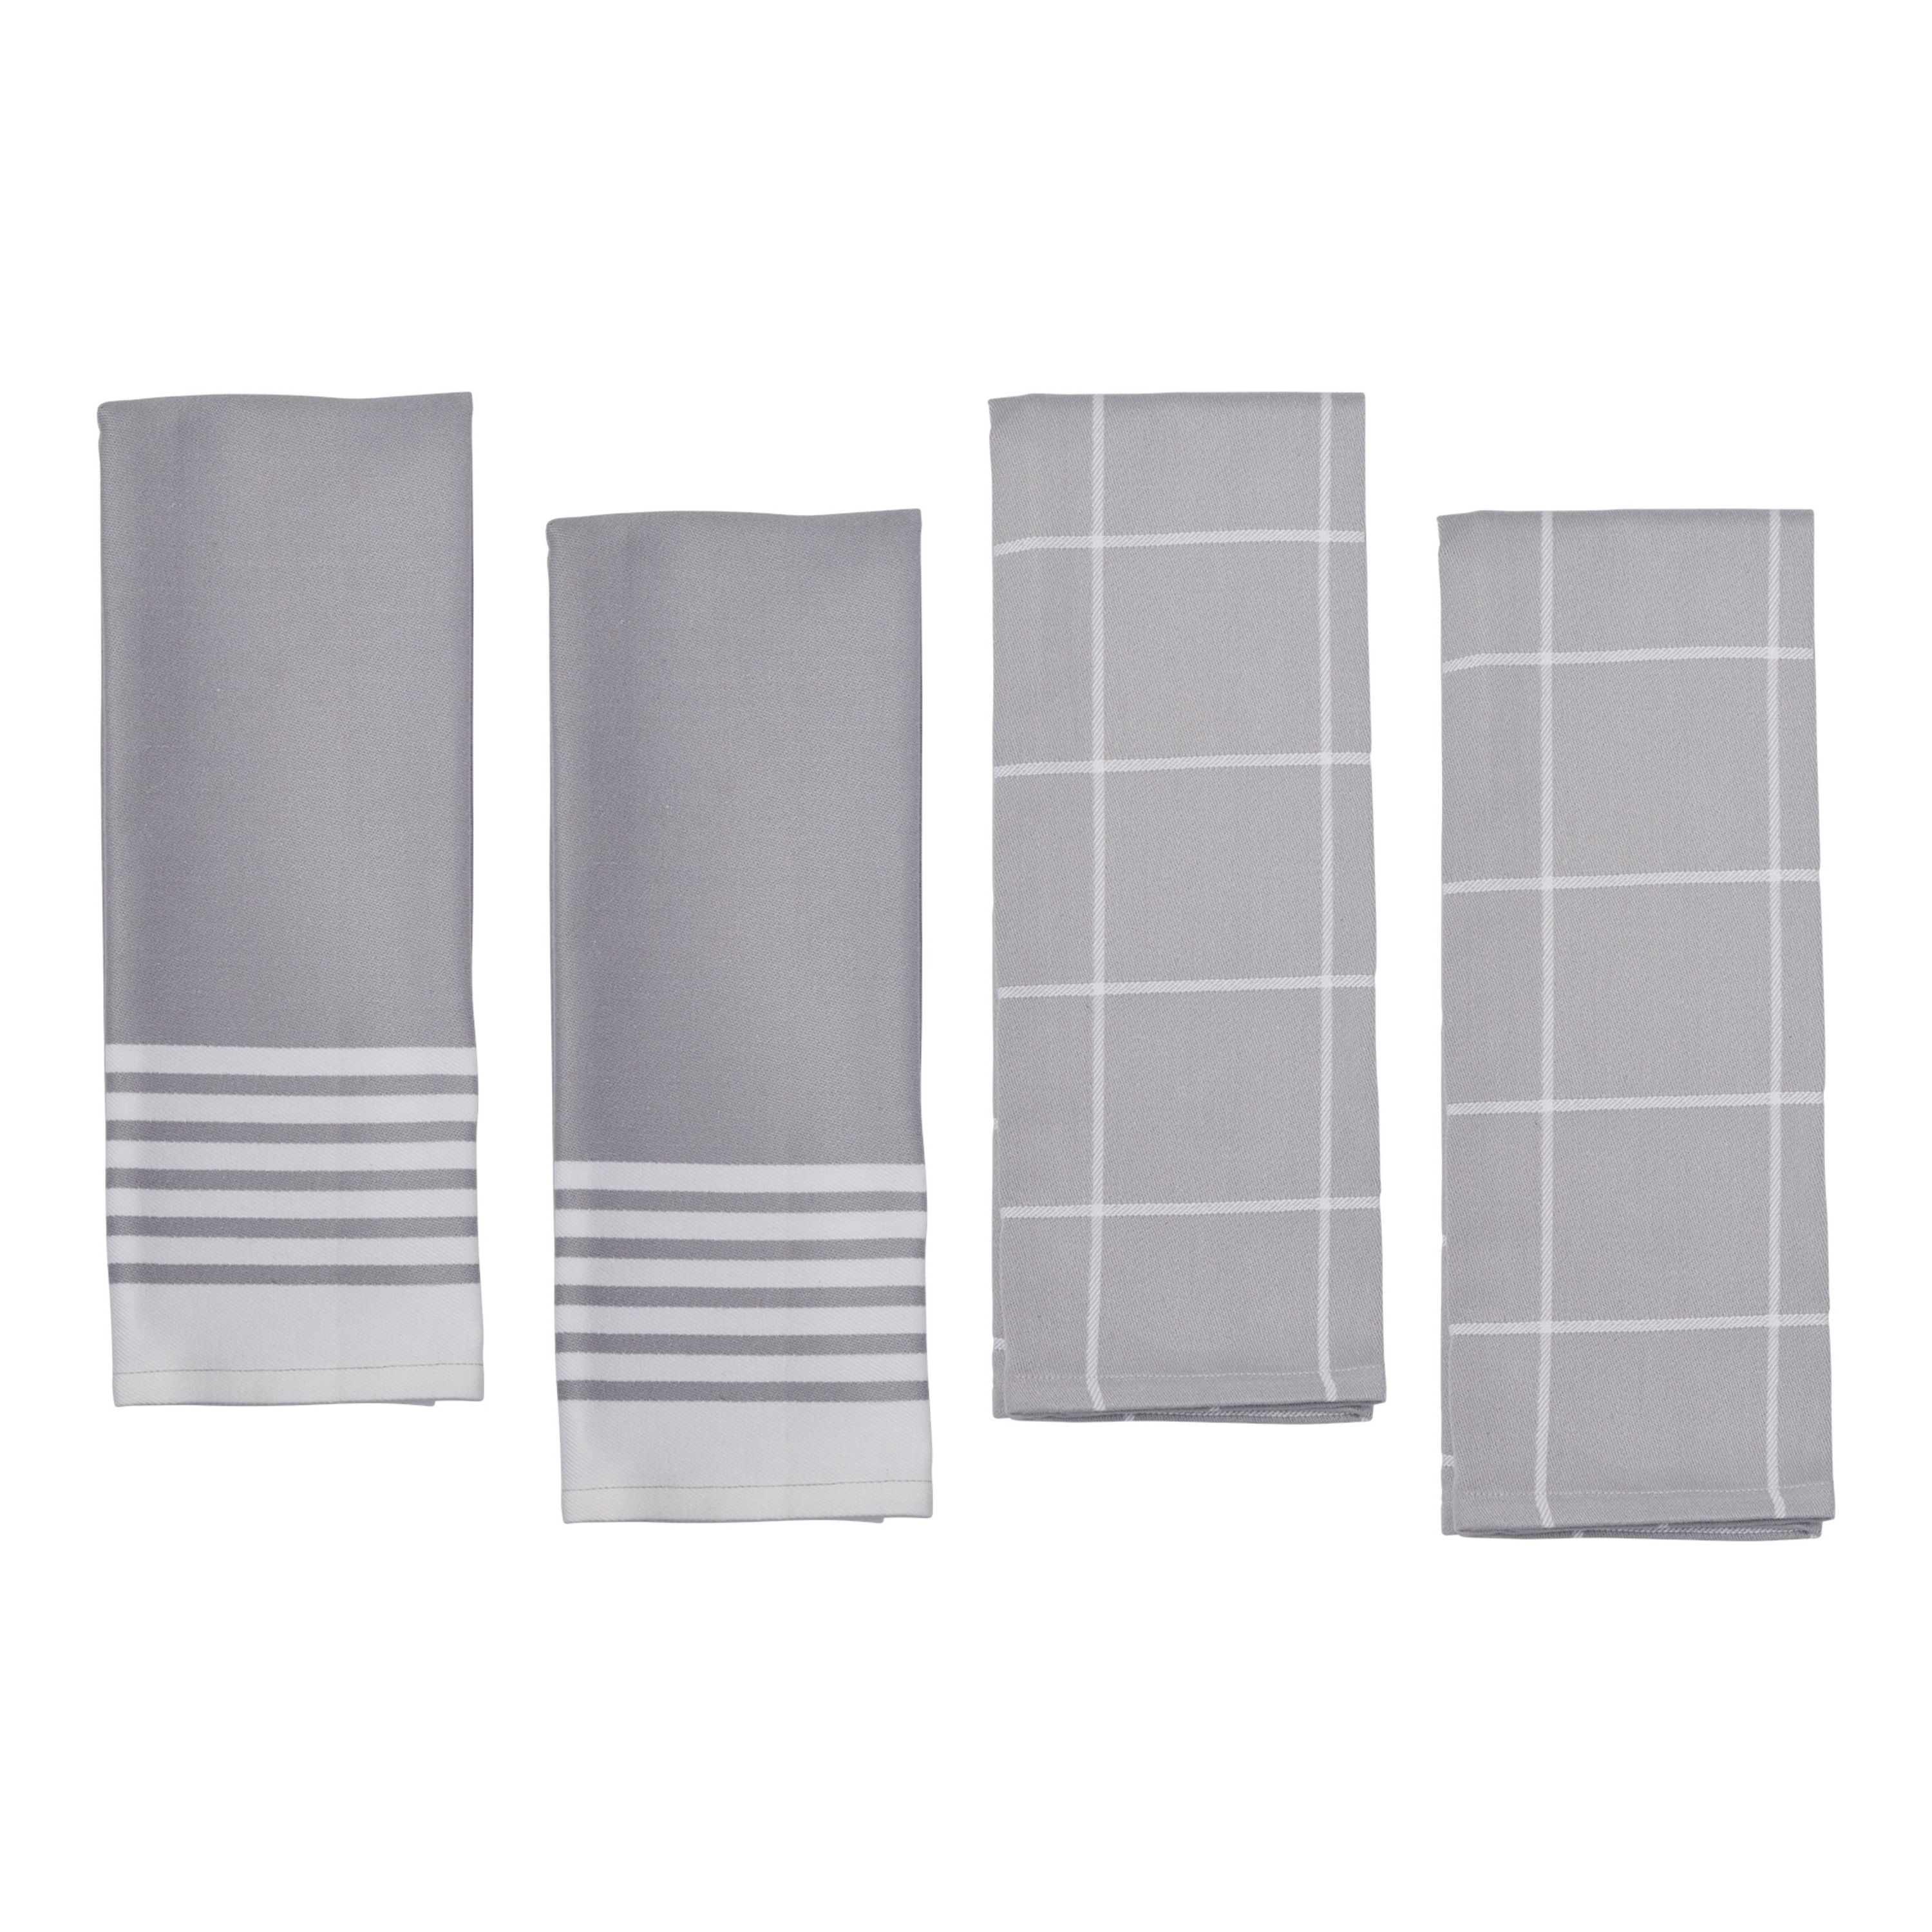 dish towel racks or holders